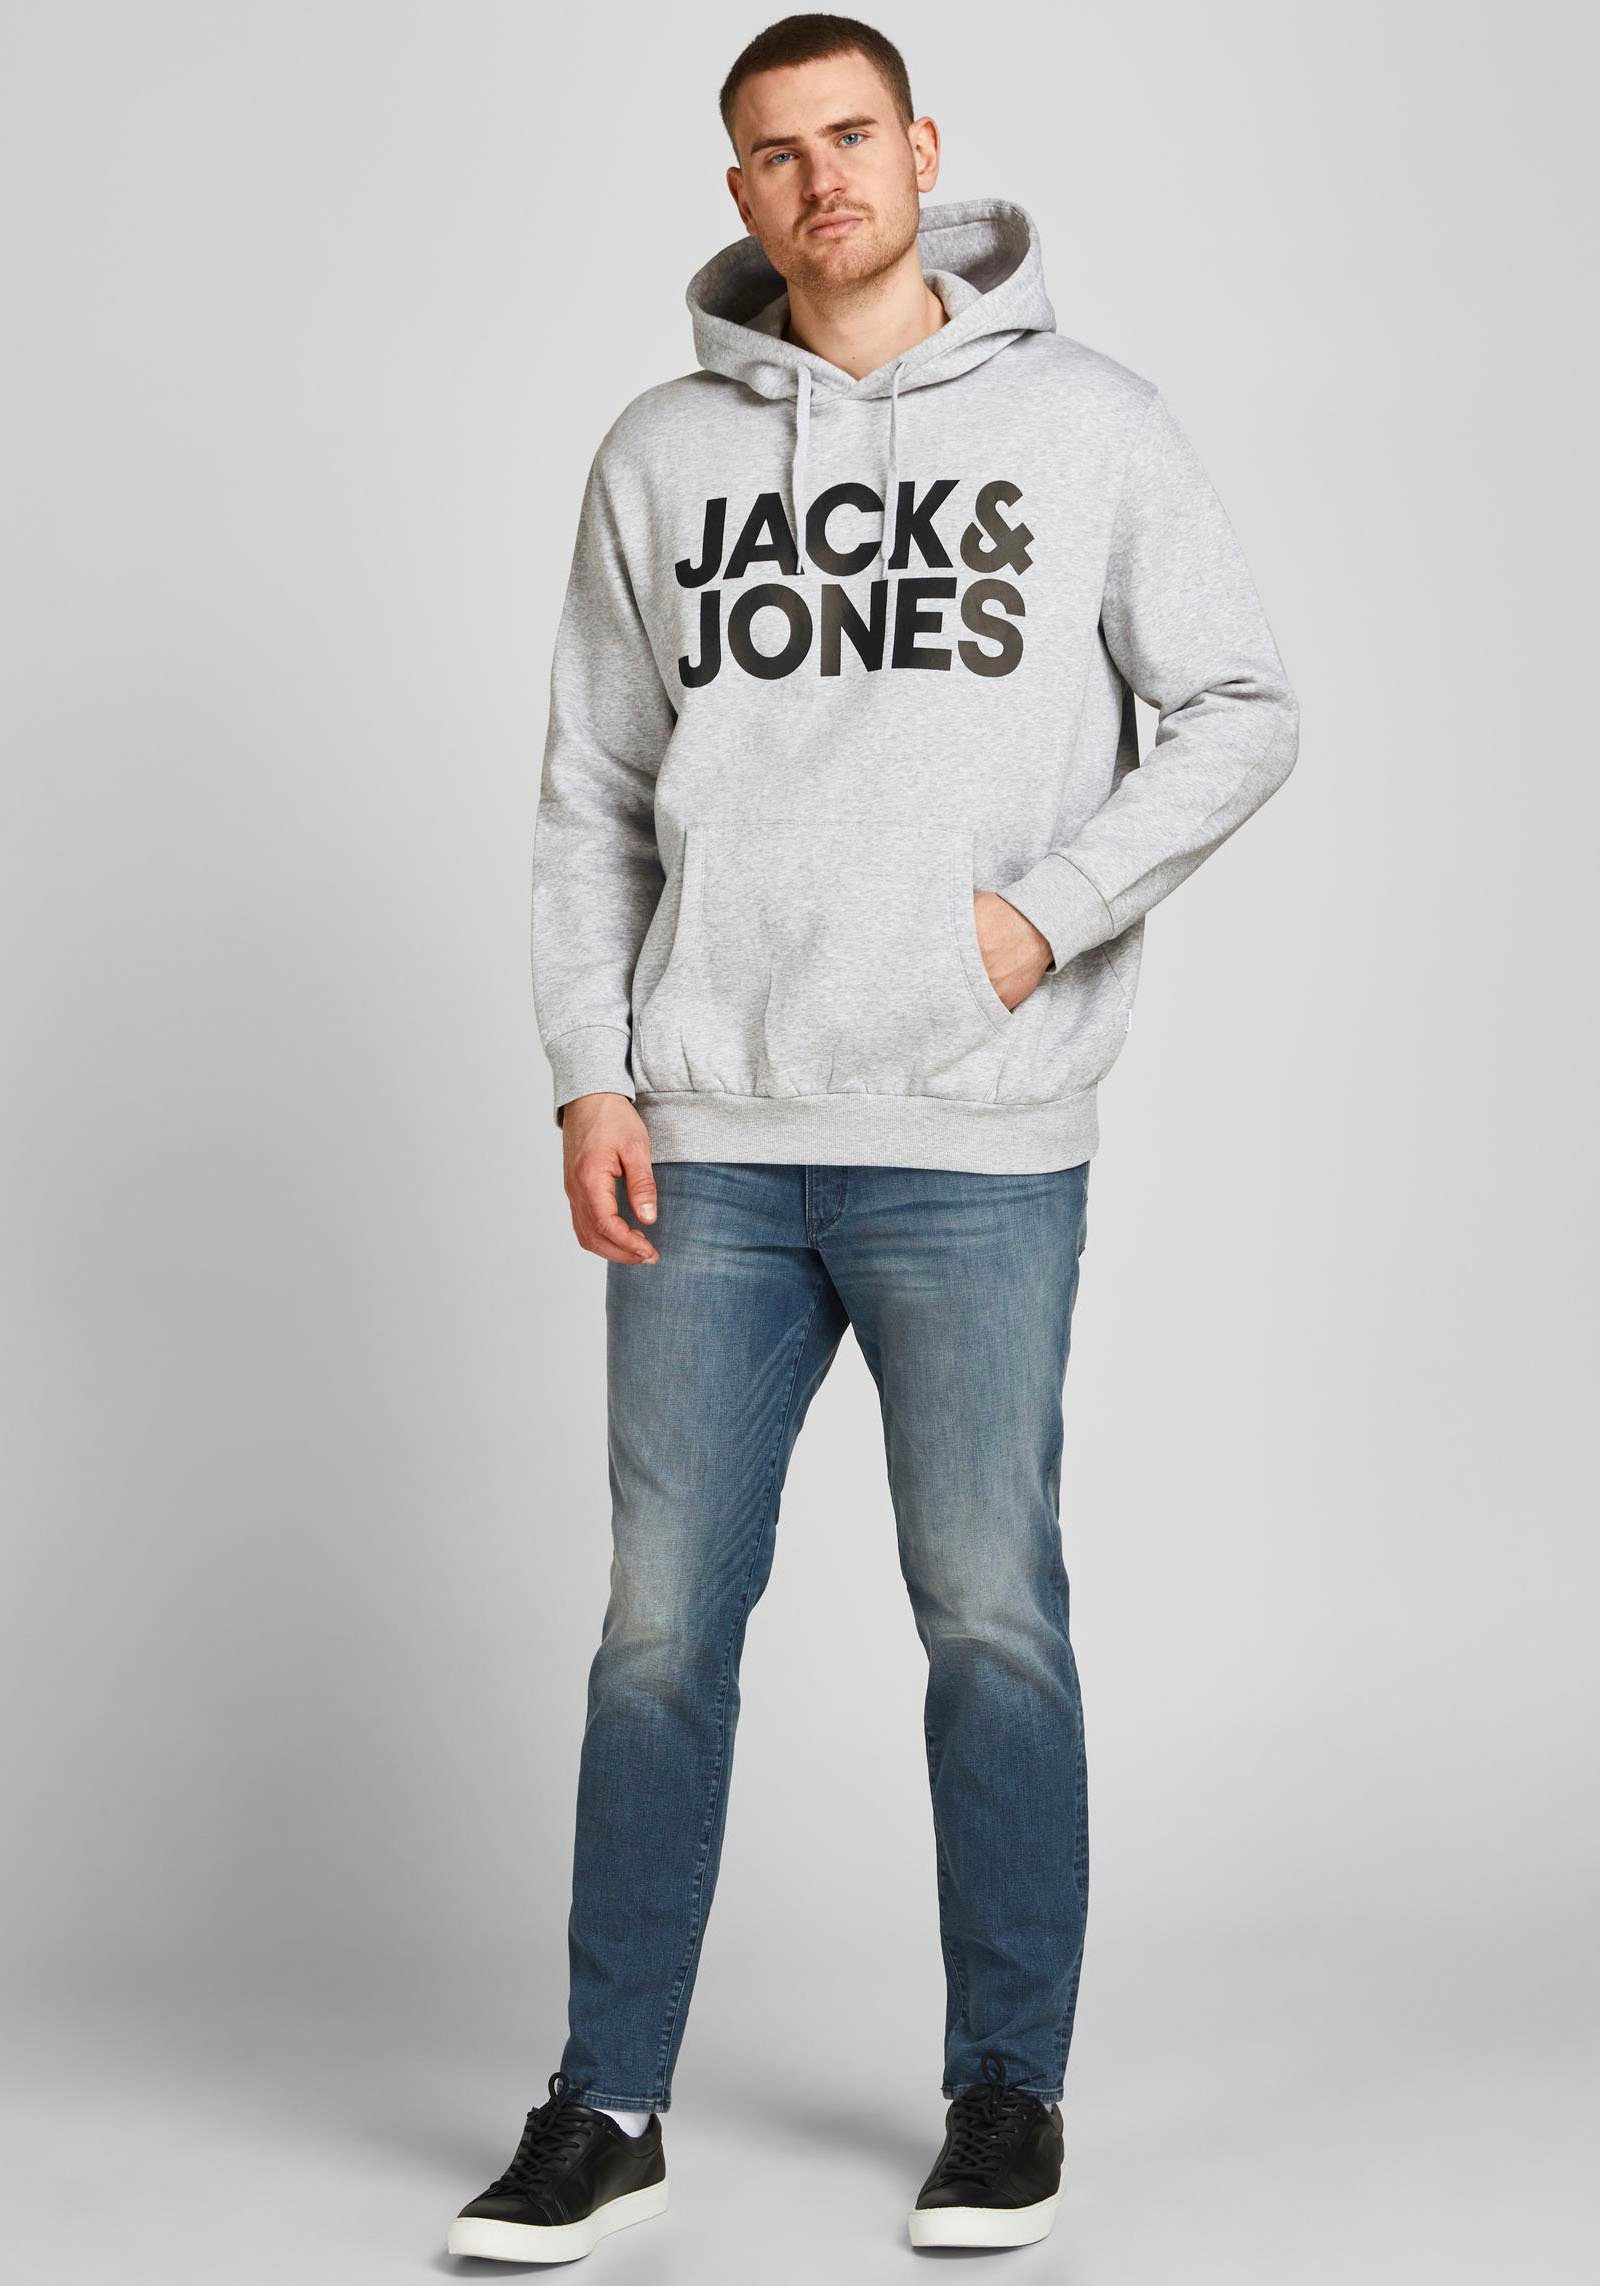 HOOD Bis Jones LOGO Kapuzensweatshirt CORP SWEAT & hellgrau-meliert PlusSize Jack 6XL Größe